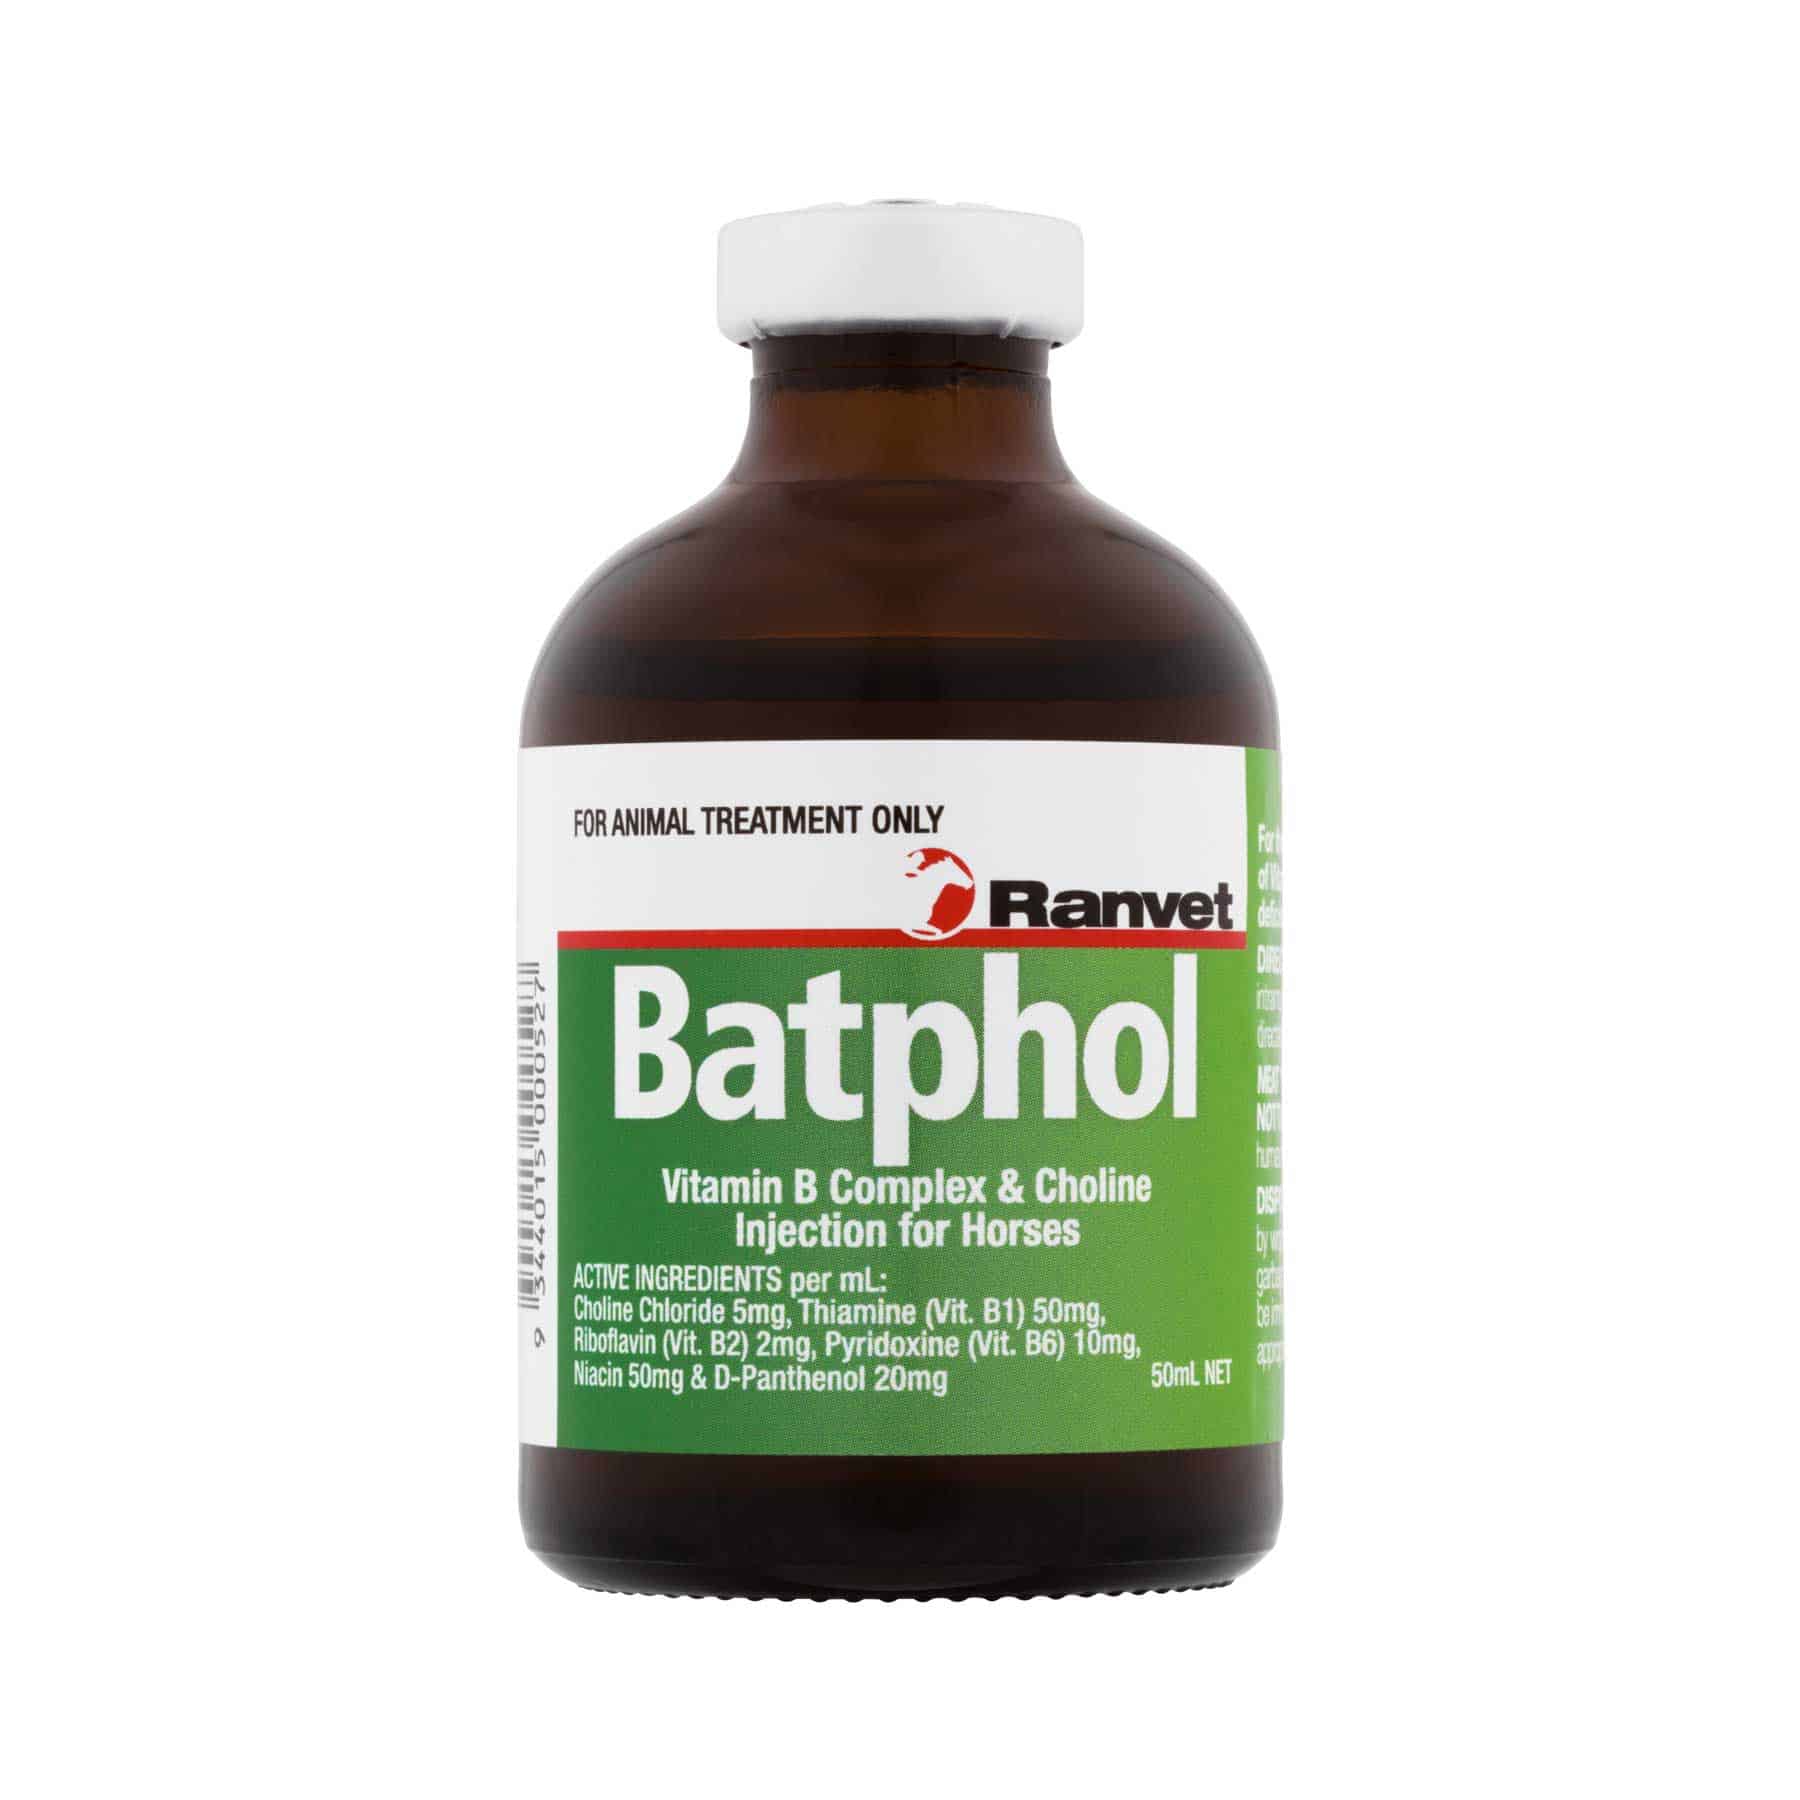 Batphol Vitamin B Complex Choline Injection For Horses